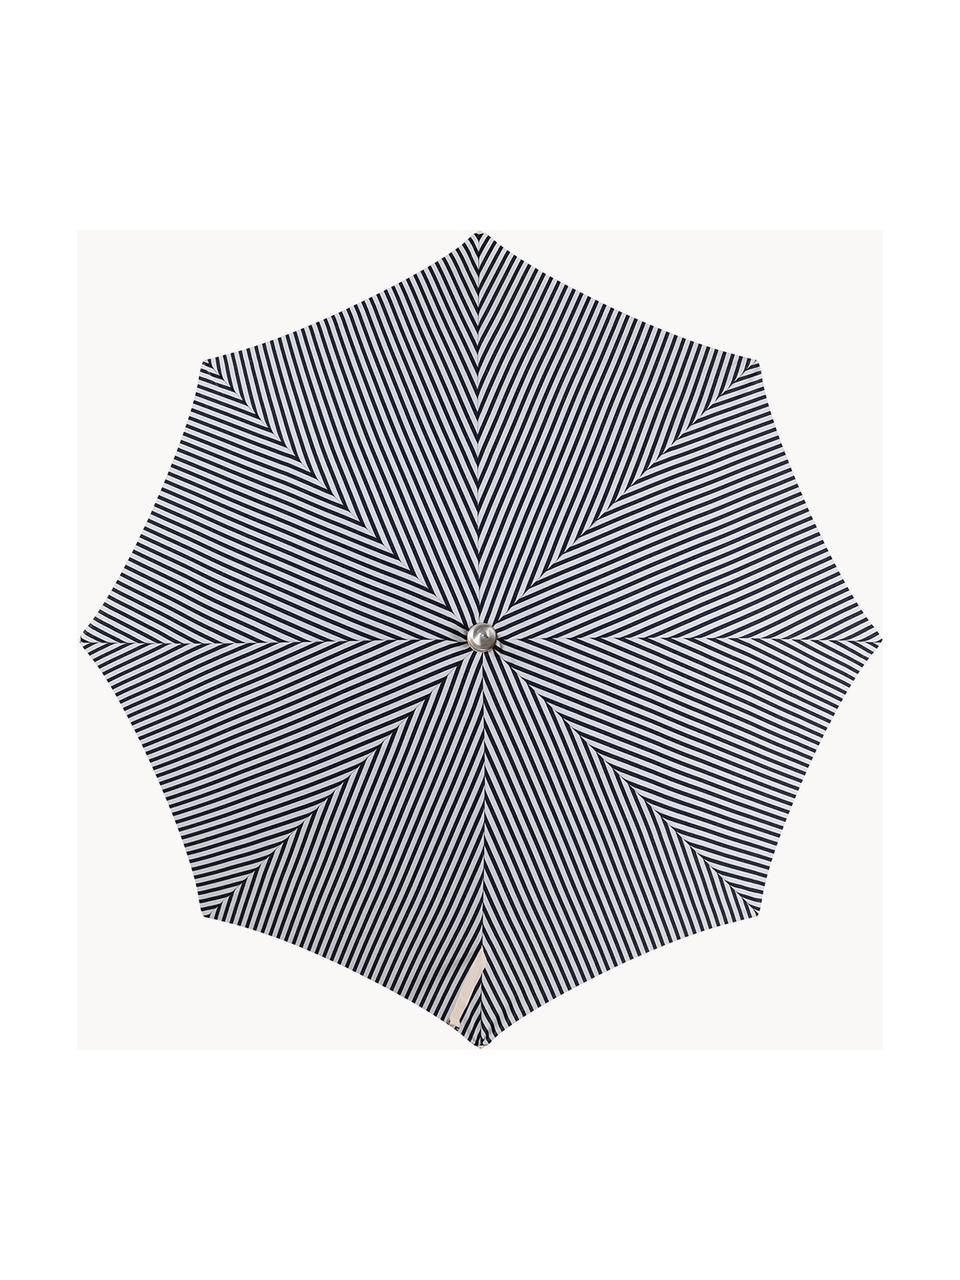 Buigbare parasol Retro met franjes, Ø 180 cm, Frame: gelamineerd hout, Franjes: katoen, Donkerblauw, crèmewit, Ø 180 x H 230 cm